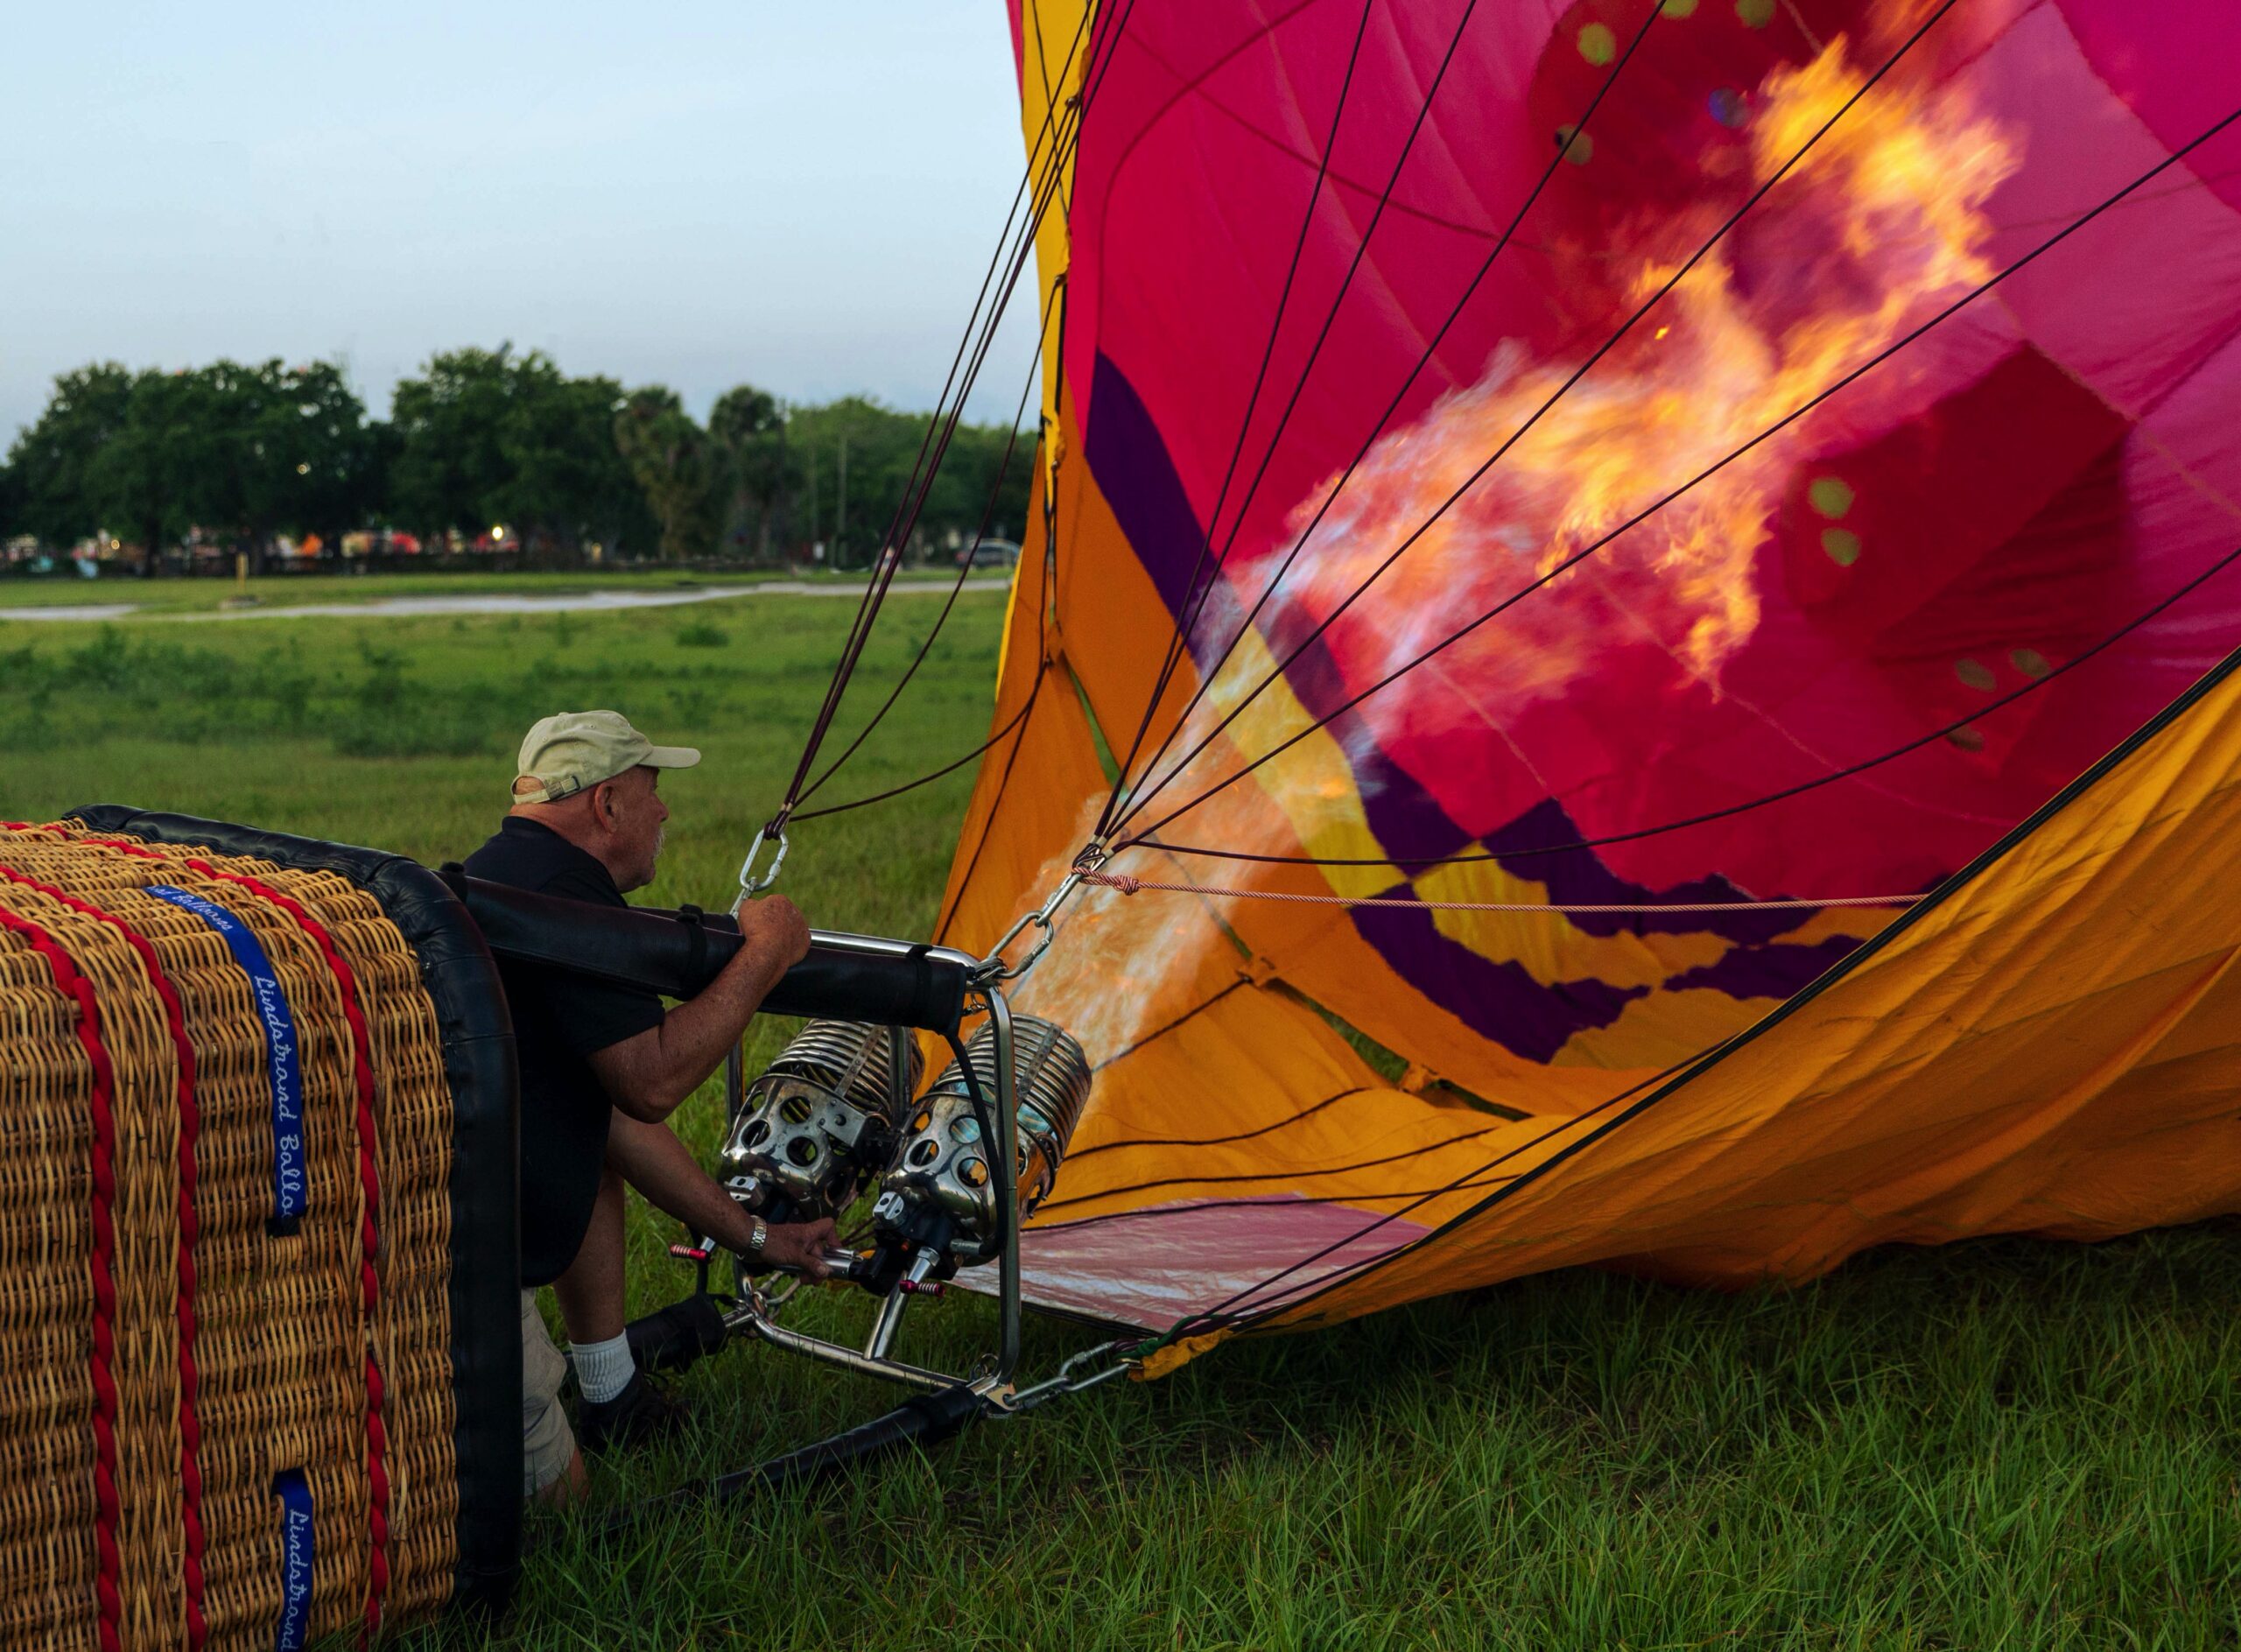 Heating up the hot air balloon.